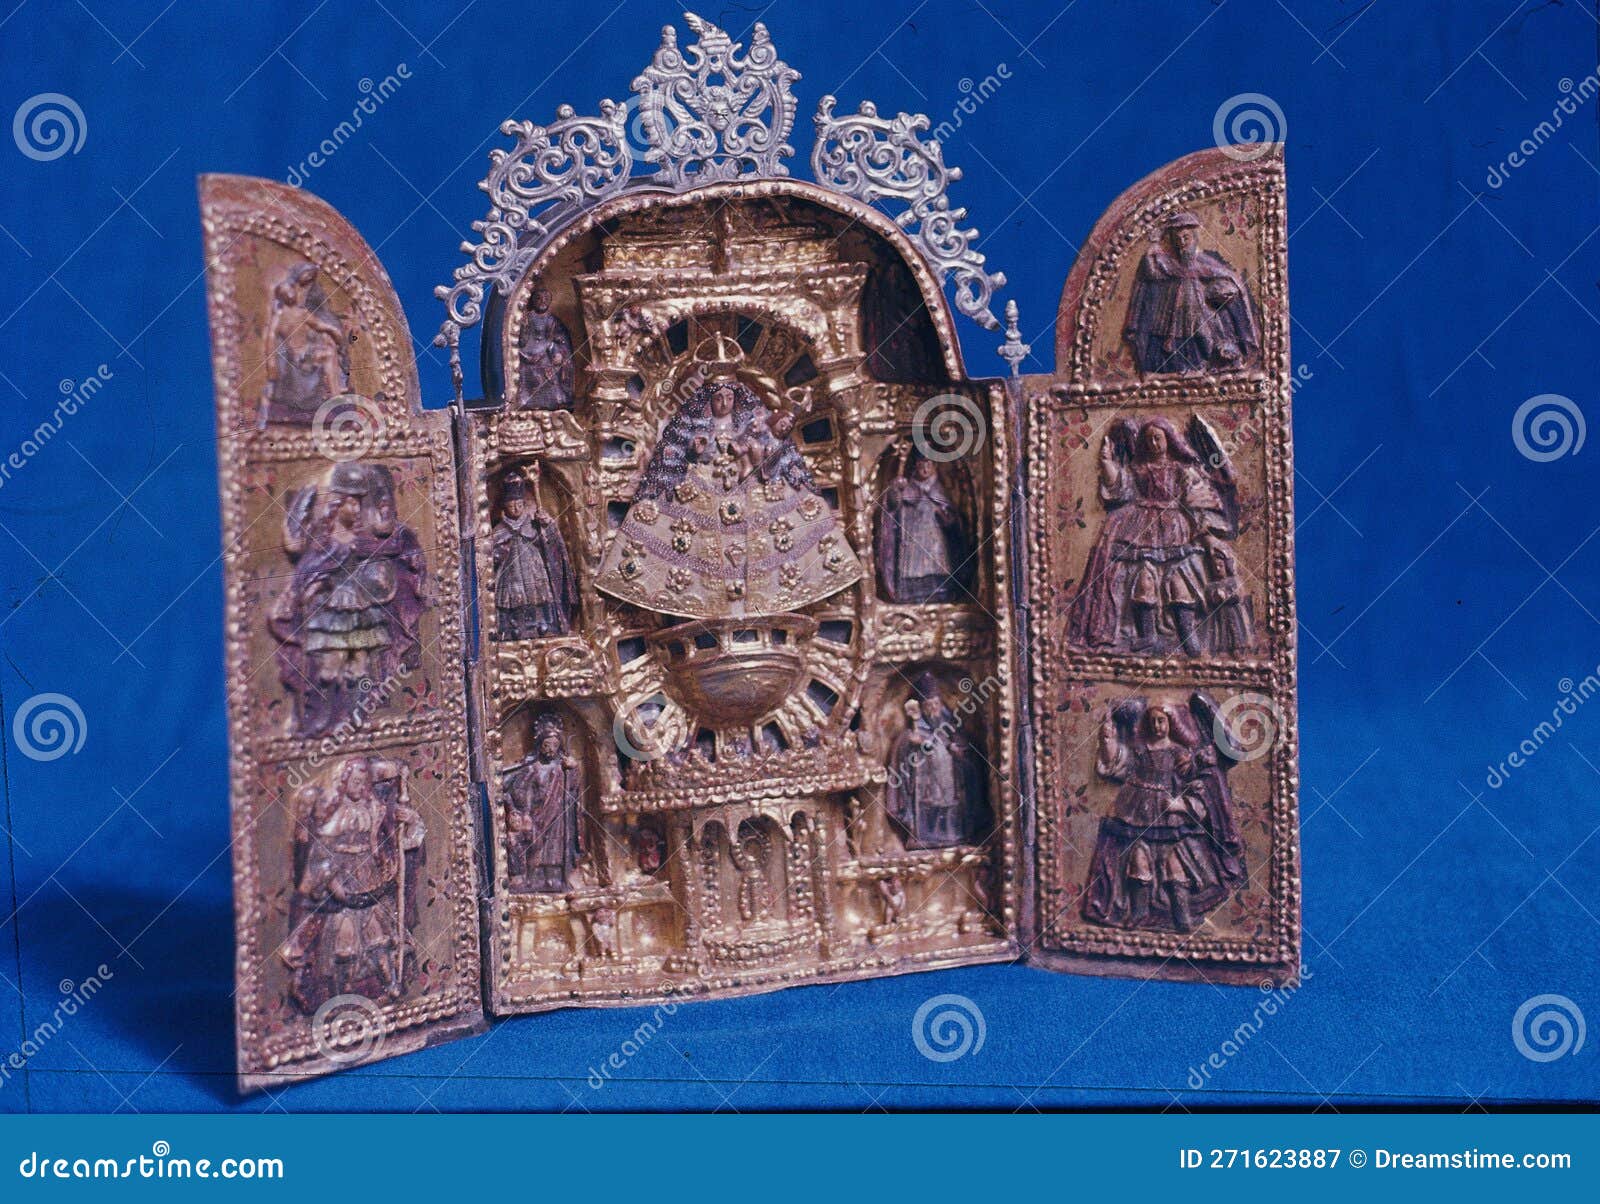 ayacucho, peru : a traditional 'retablo', a typical historical 17 century peruvian handicraft from the ayacucho region